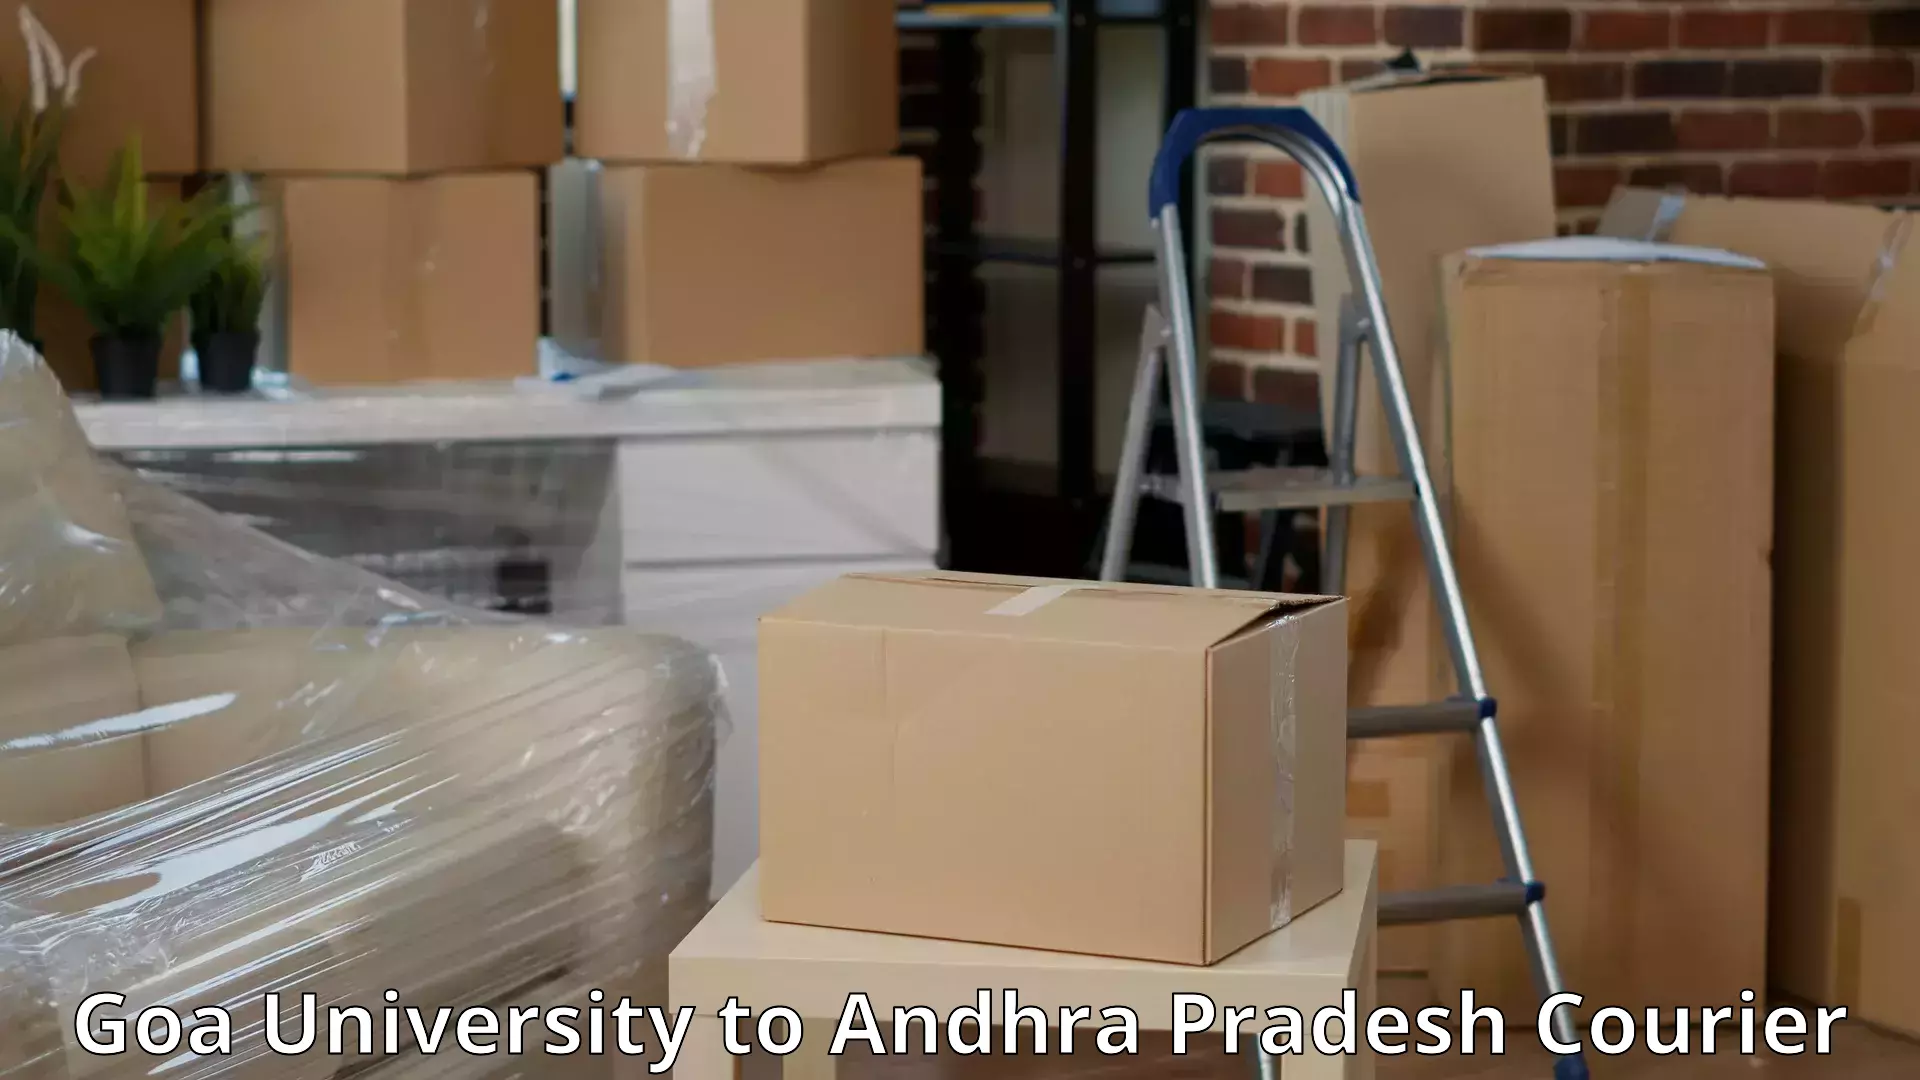 Quality moving and storage Goa University to Penukonda